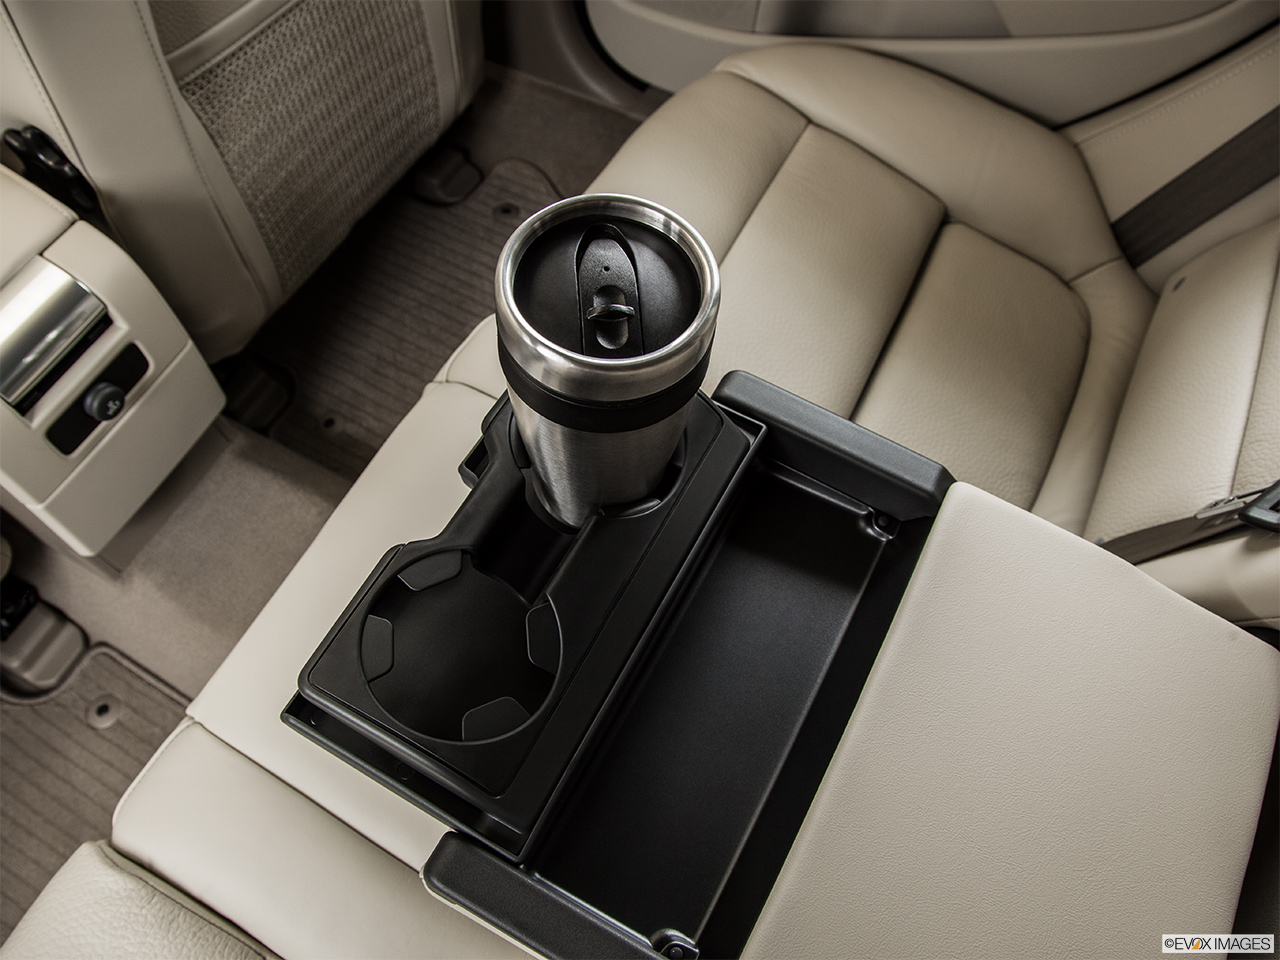 2015 Volvo XC70 Premier Plus Cup holder prop (quaternary). 